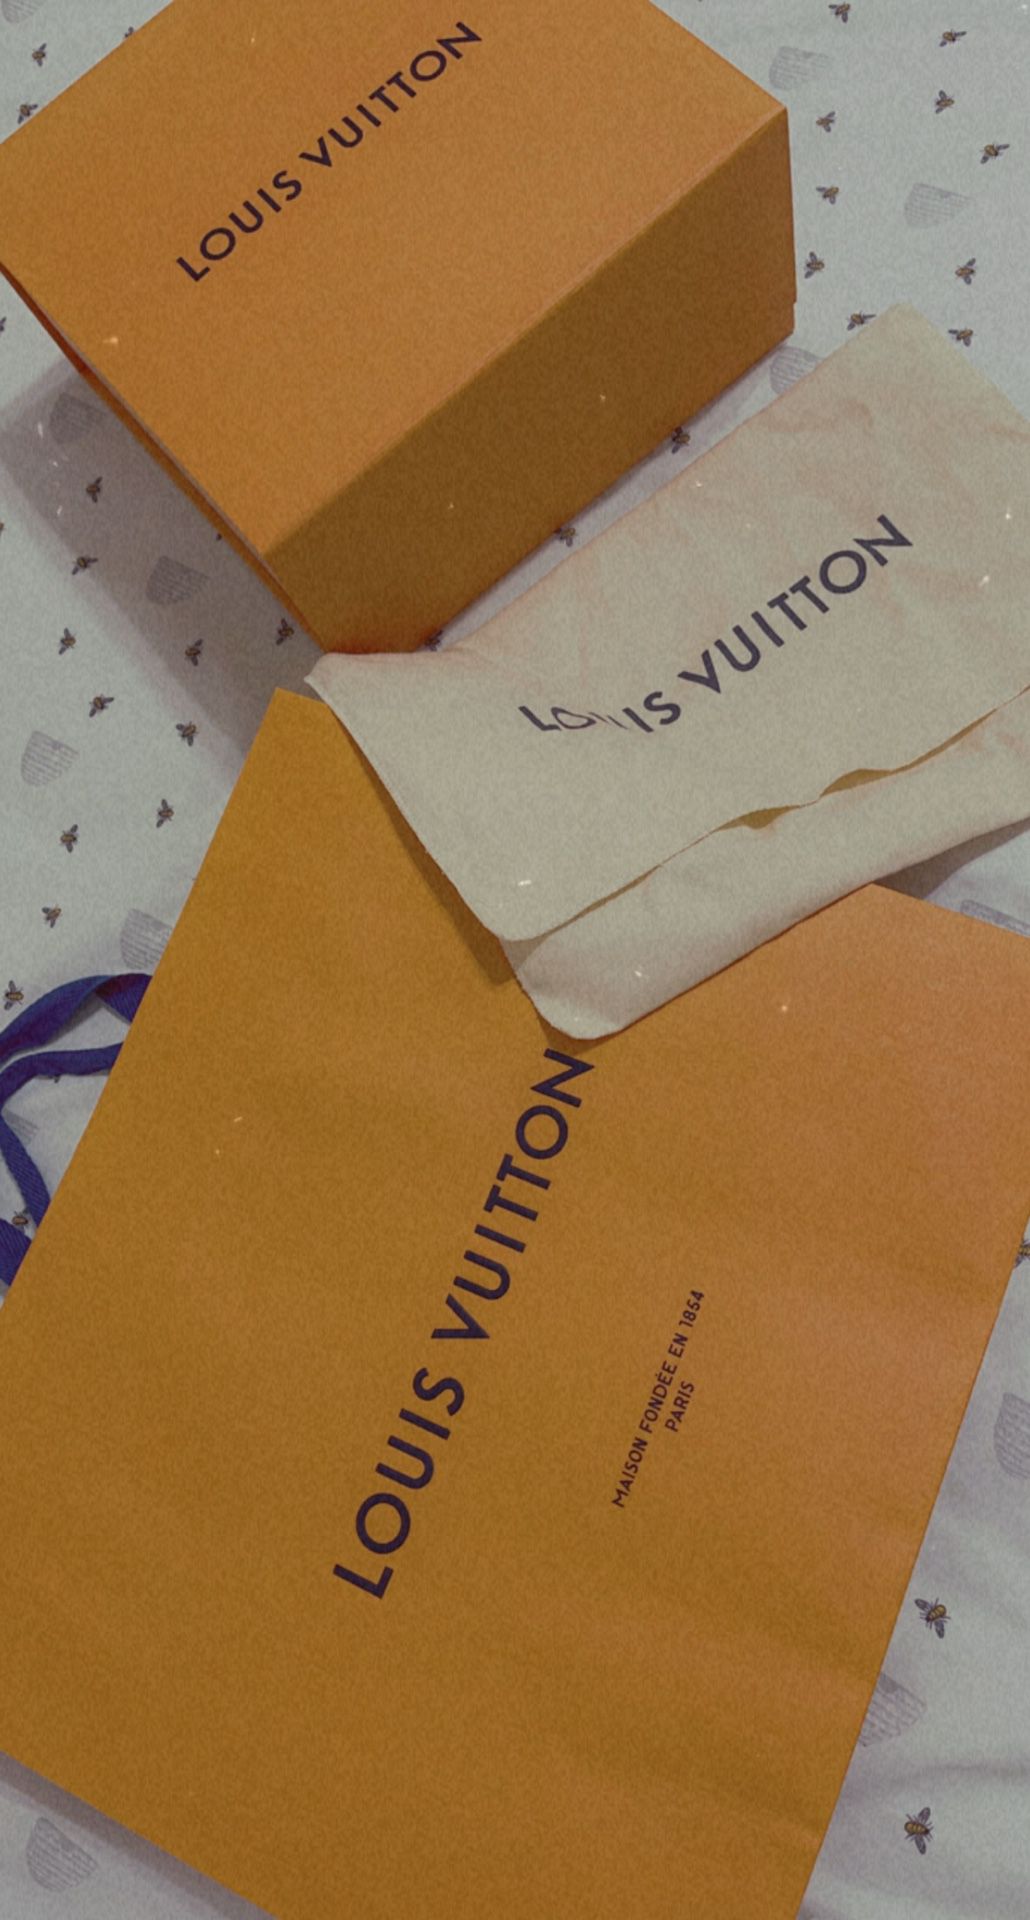 Louis Vuitton Shopping Bag Box